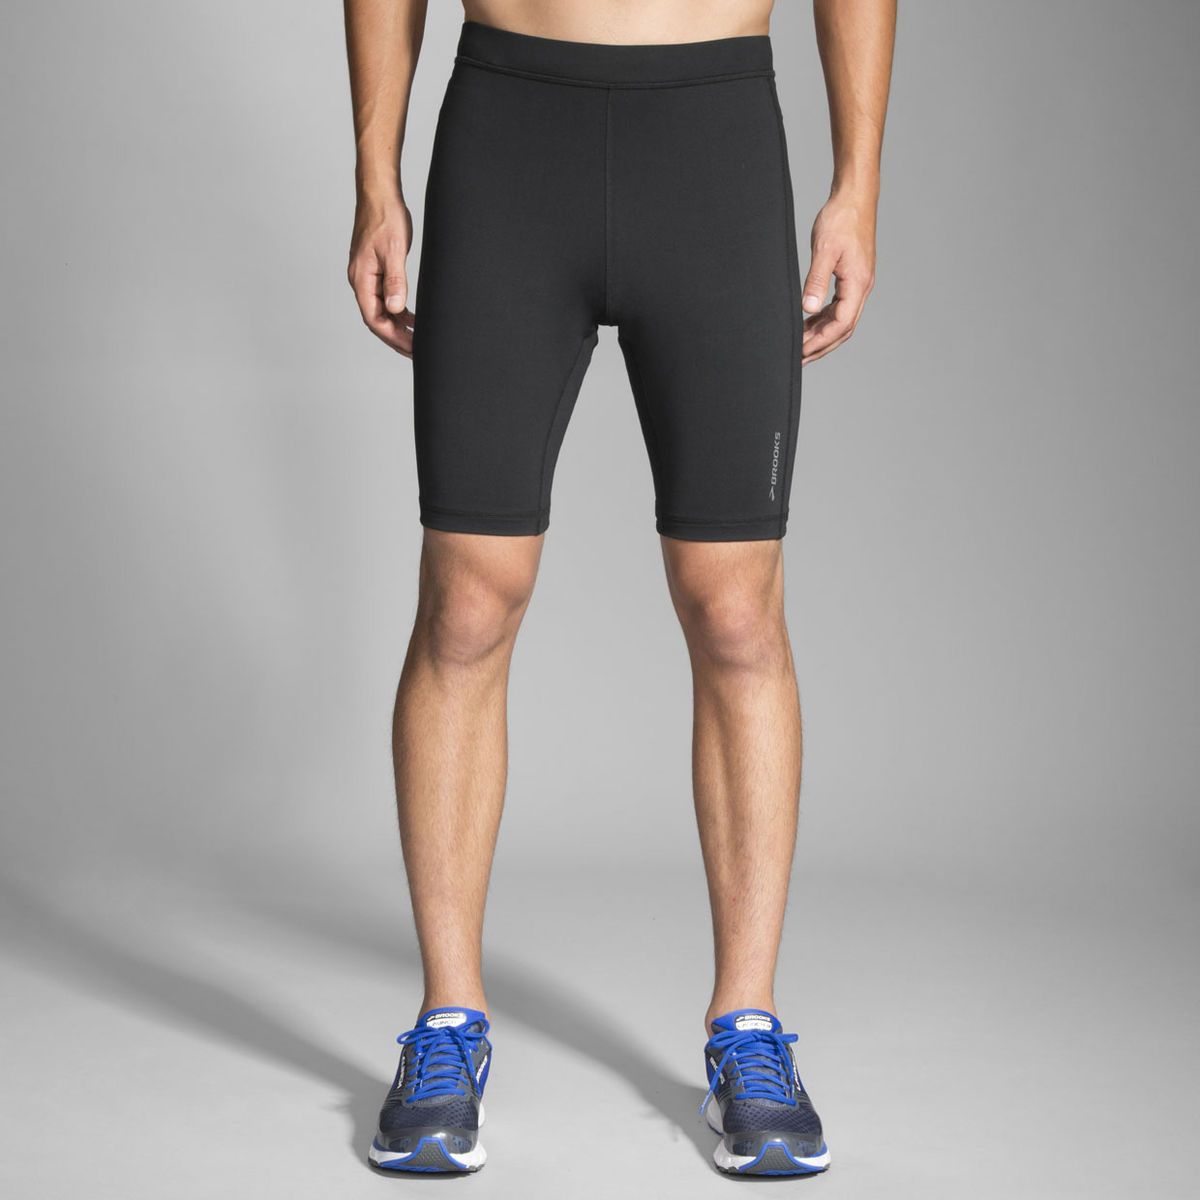 Details about   ROAR Men's Fitness Compression Shorts Workout Sports Sweatshorts